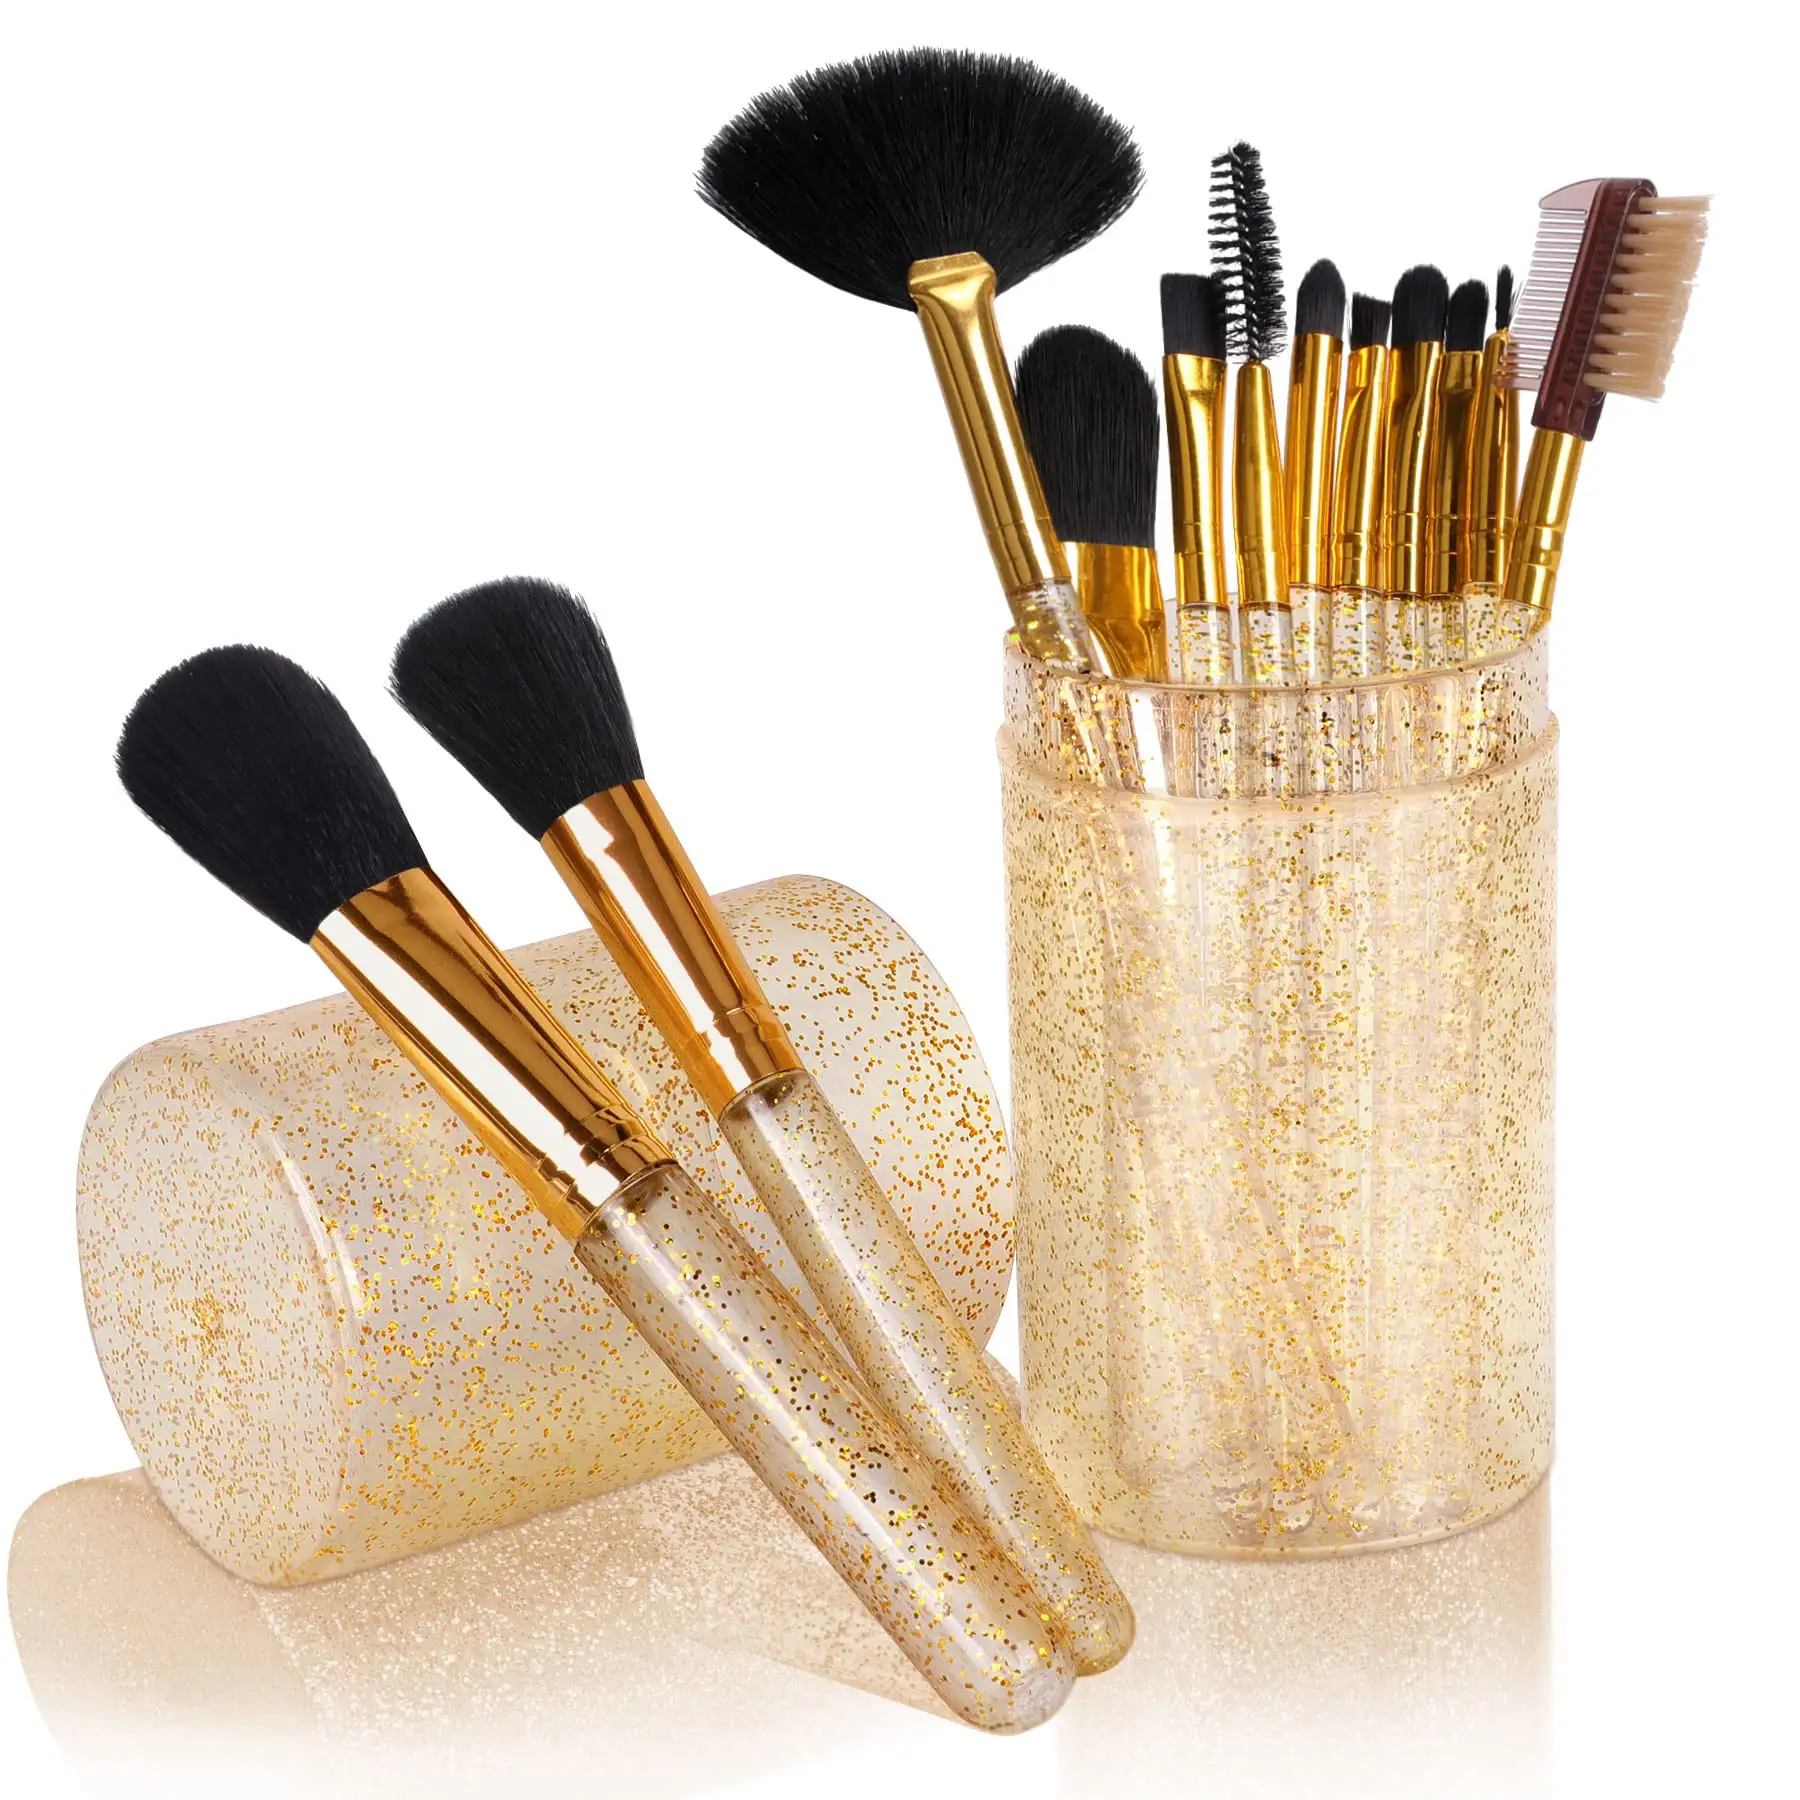 Beauty 12 pieces Professional Makeup Brush Set Vegan Box Makeup Sponge Brush Cleaner Guide Makeup Tool Gift box